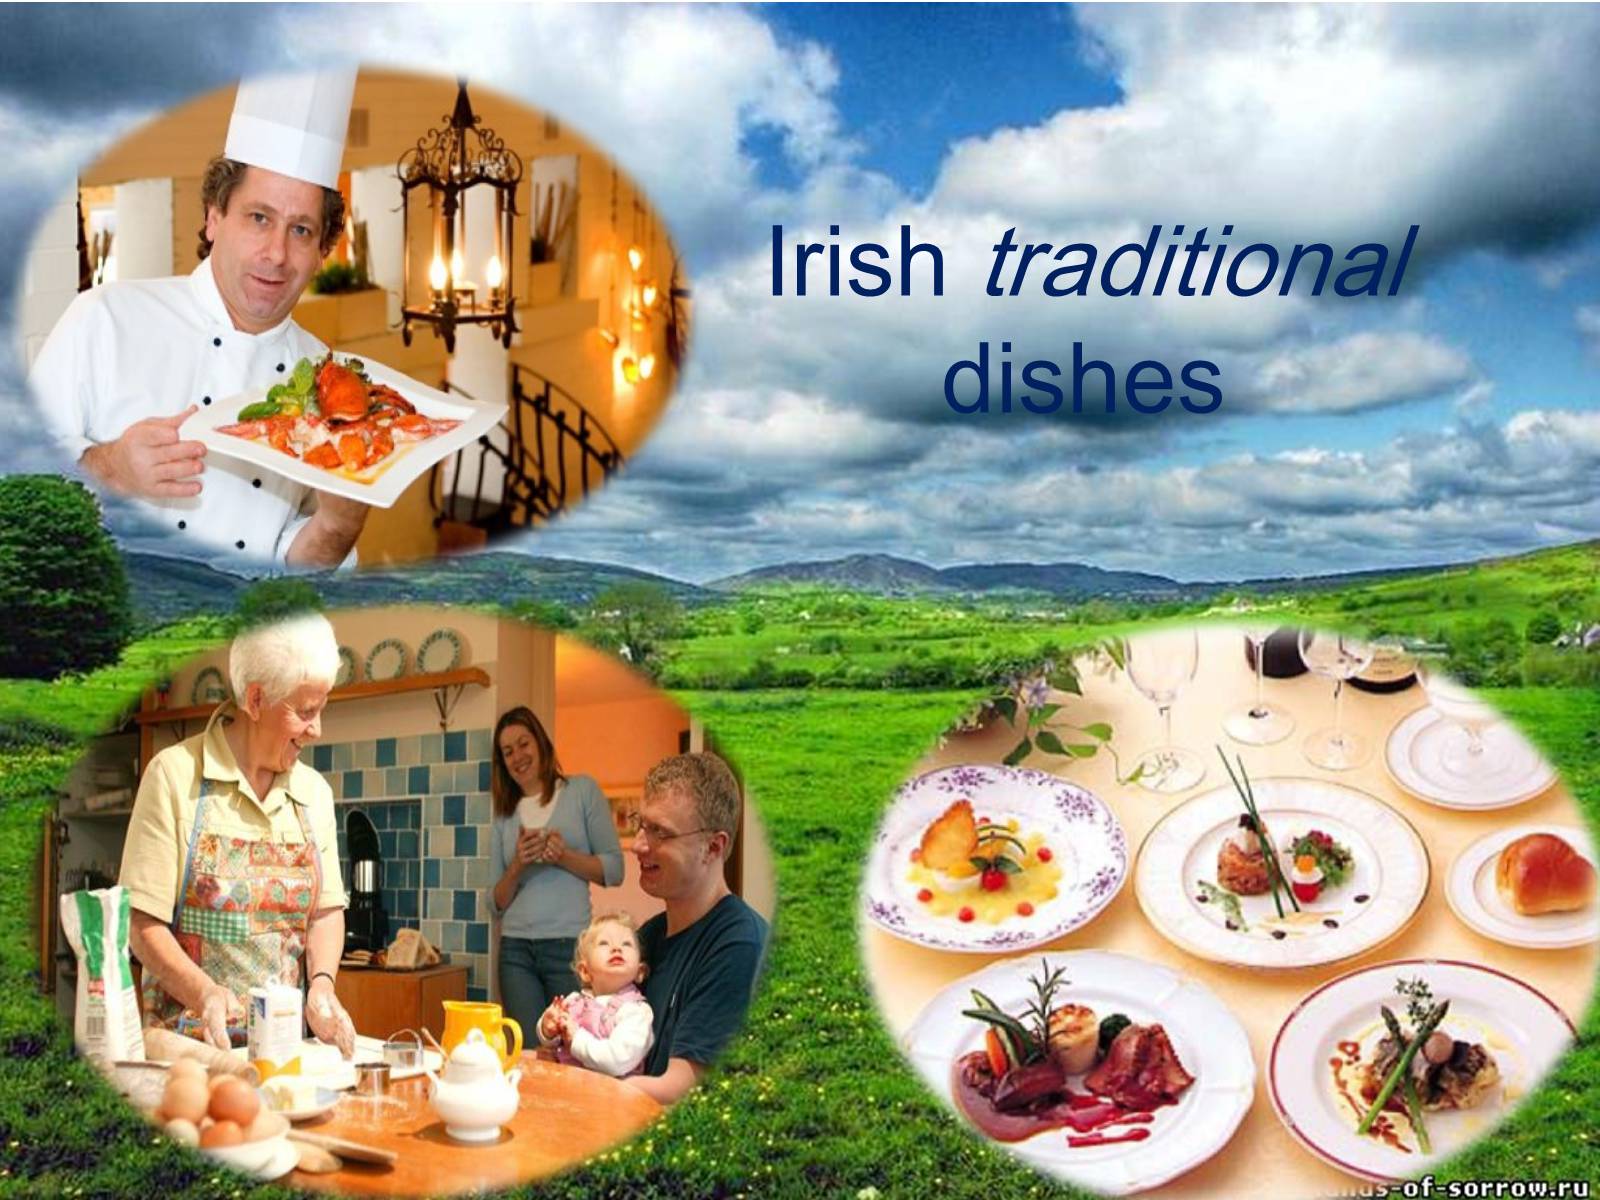 Презентація на тему «Irish traditional dishes» - Слайд #1